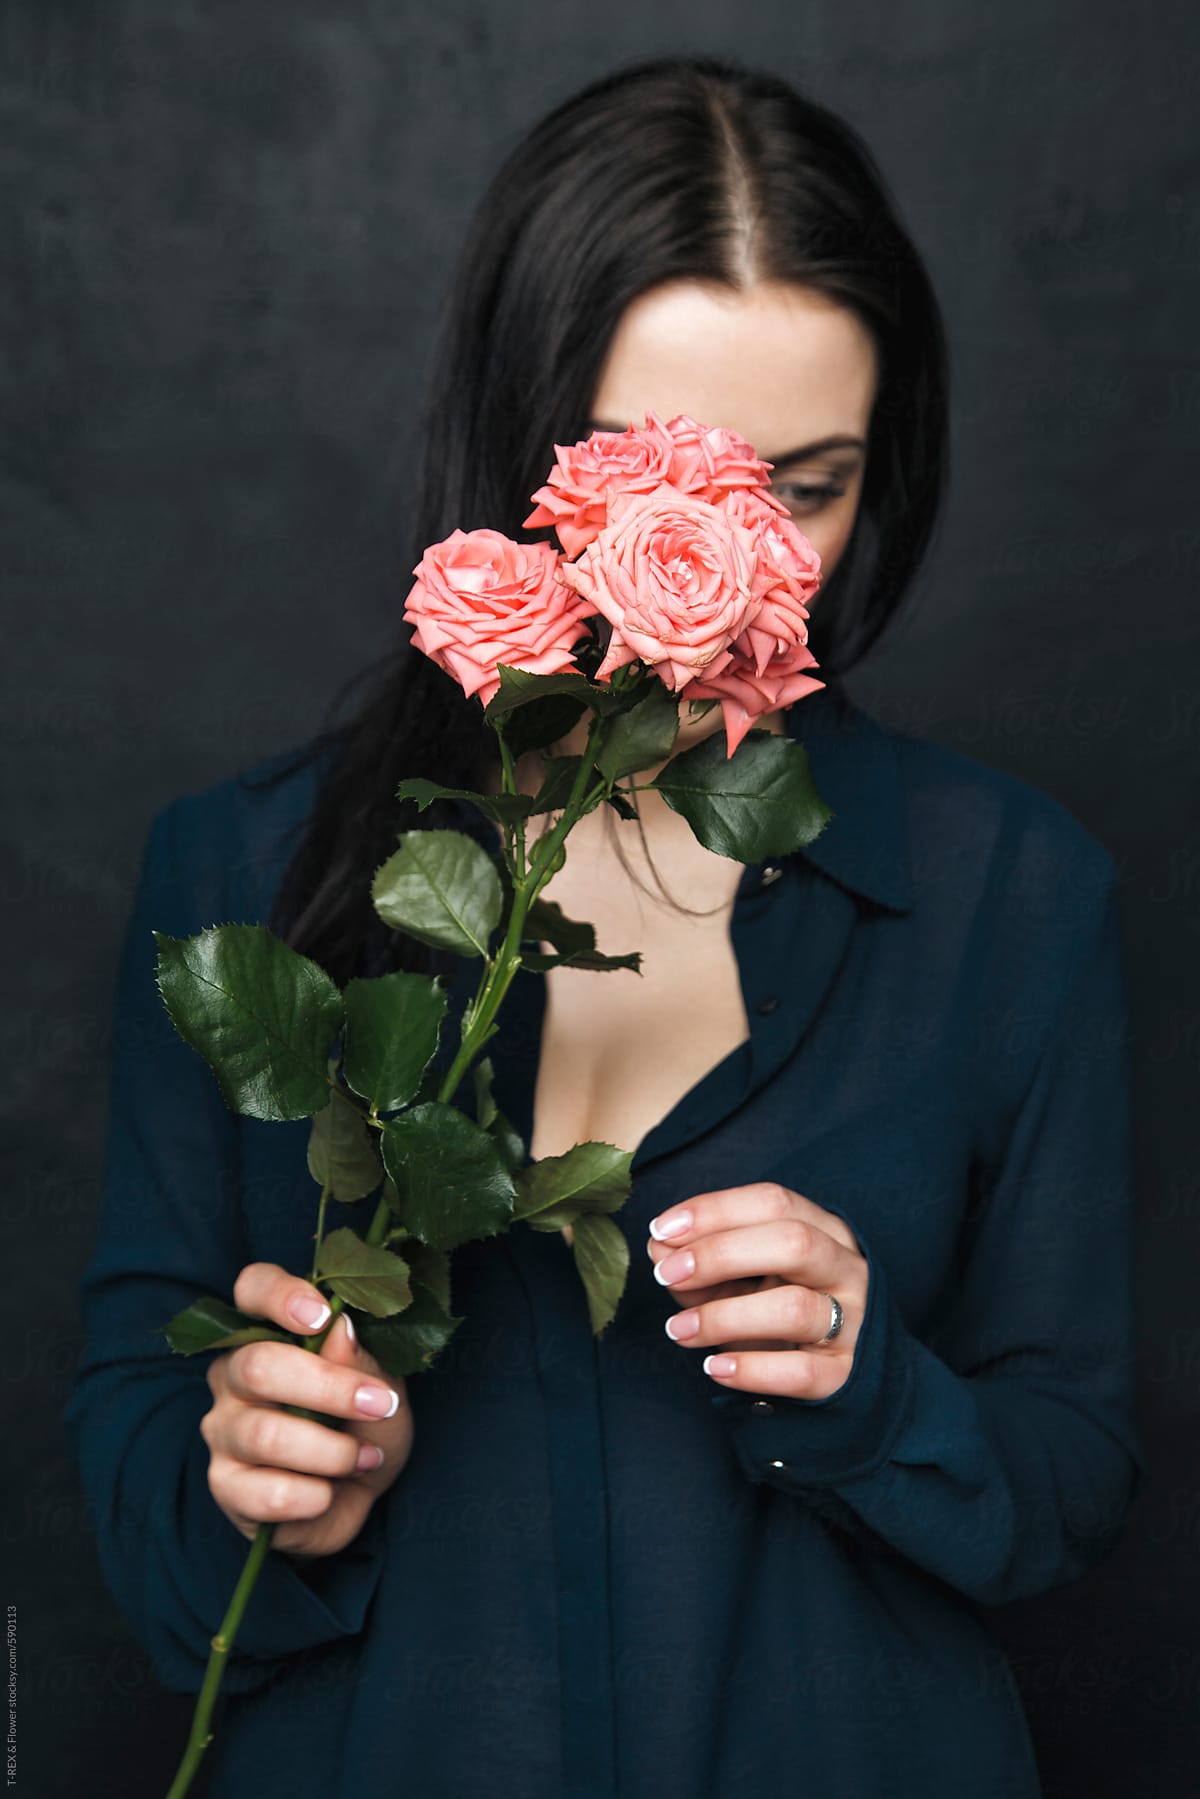 Girl With Rose By Stocksy Contributor Danil Nevsky Stocksy